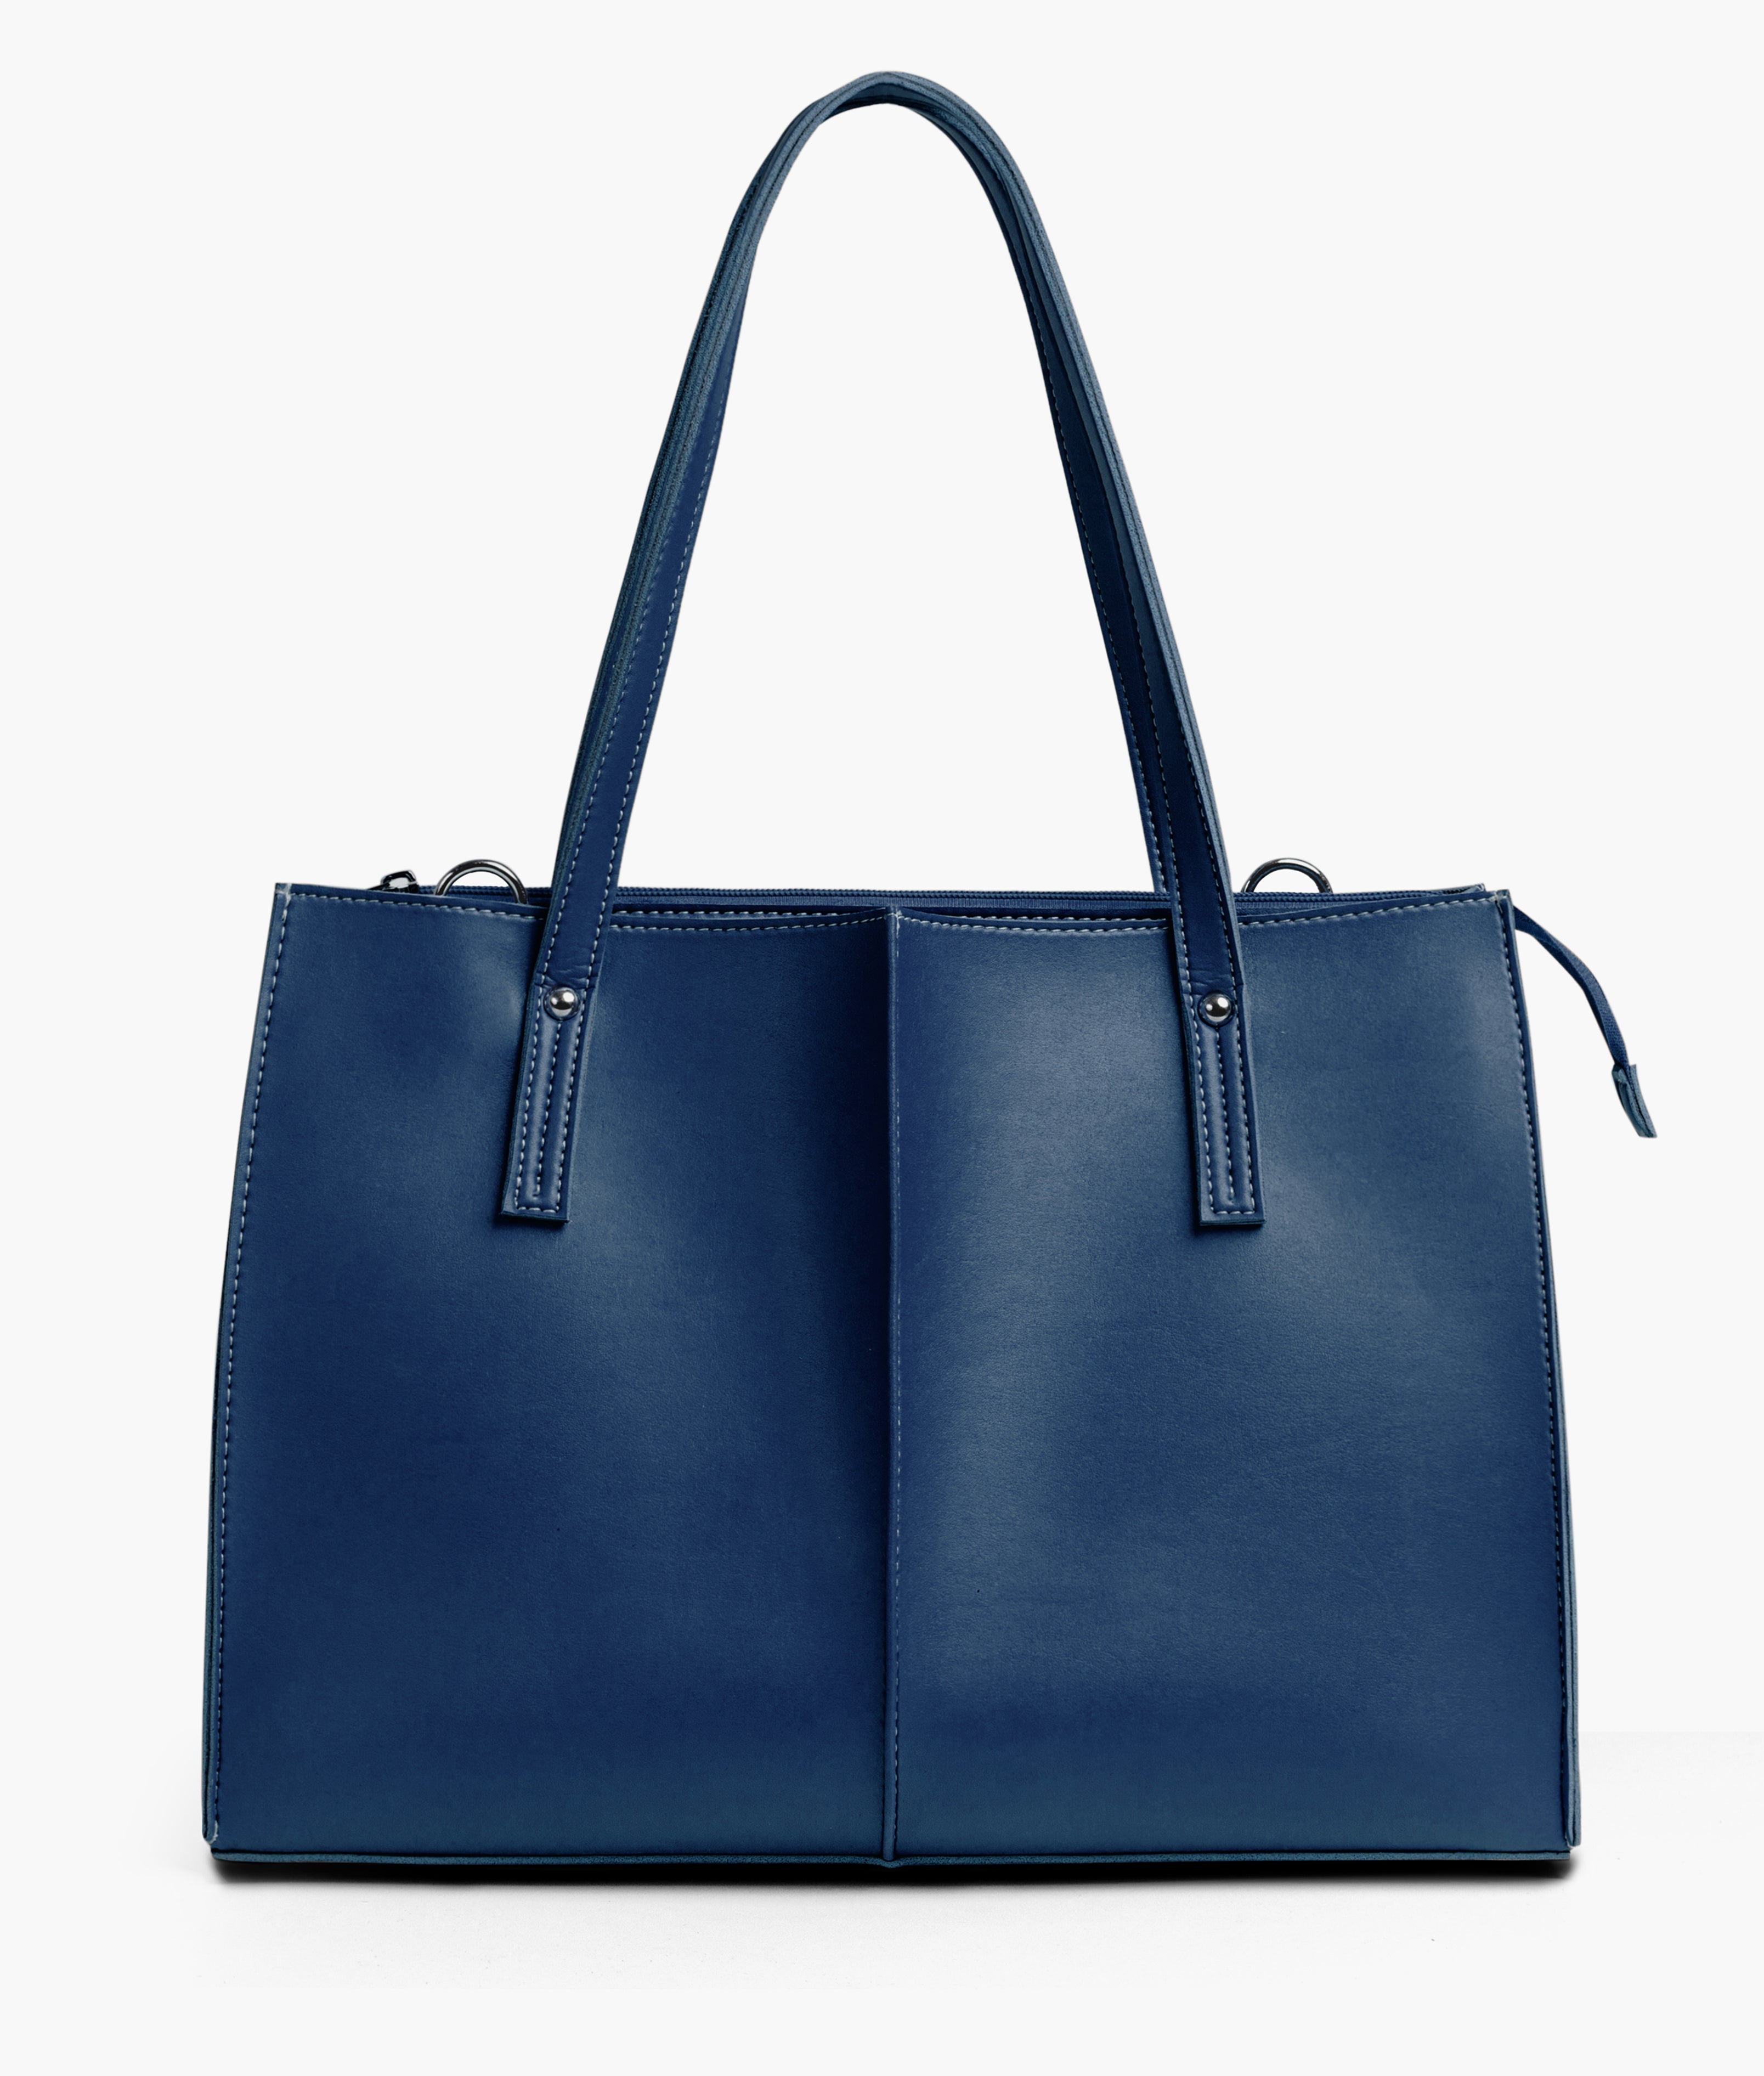 Blue work tote bag